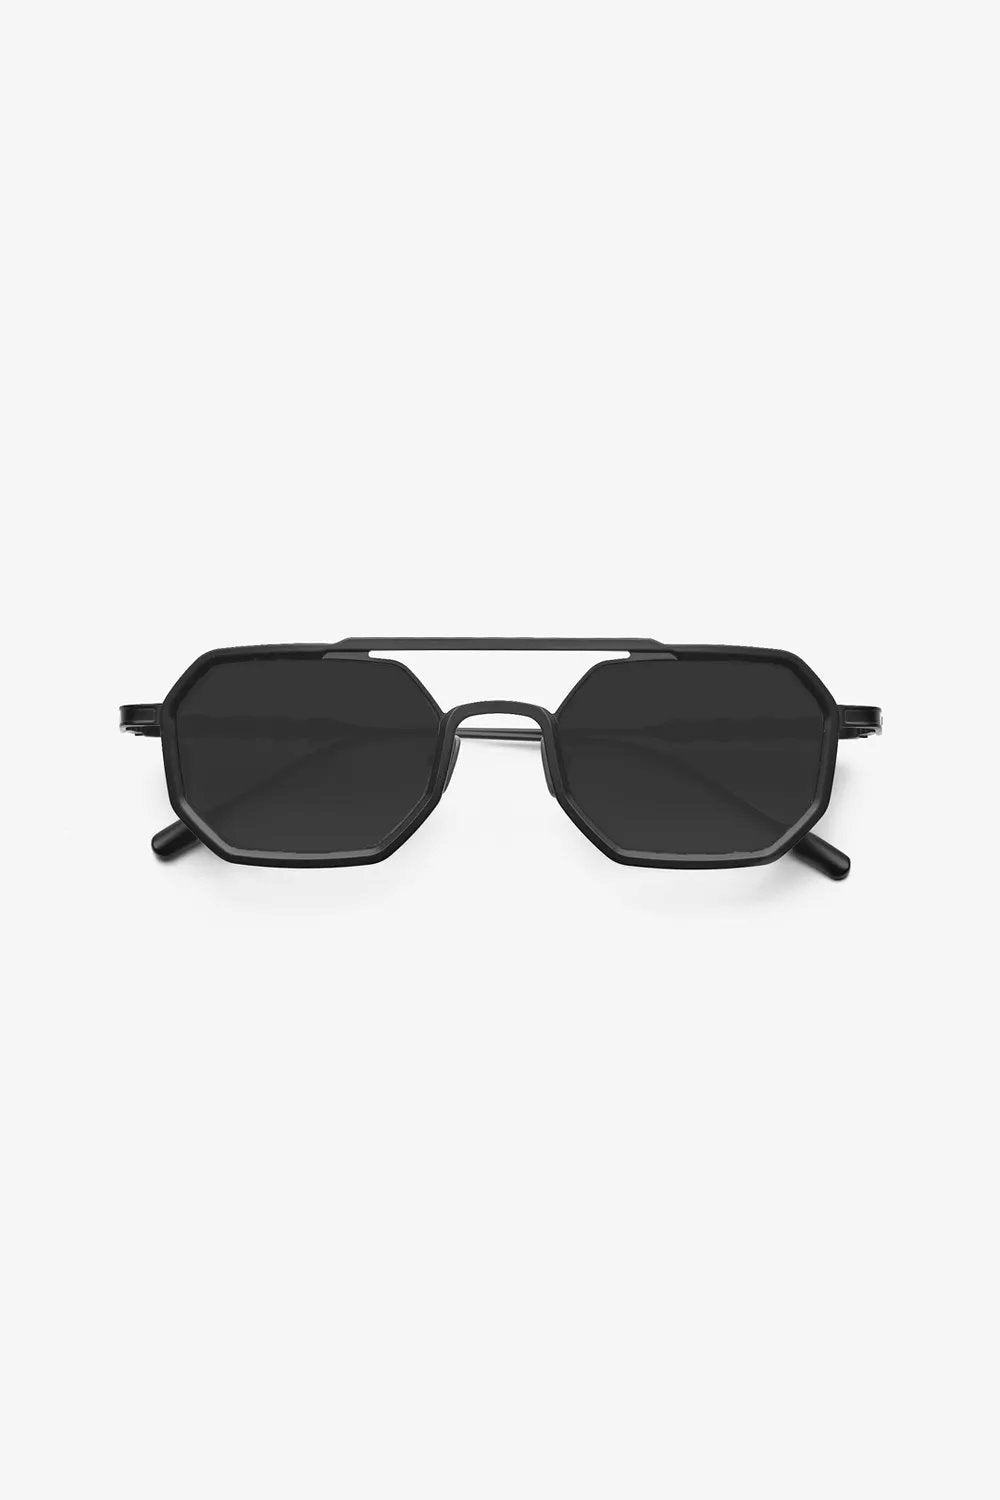 Capote - KENAZ999 Sunglasses Capote Black ONES 